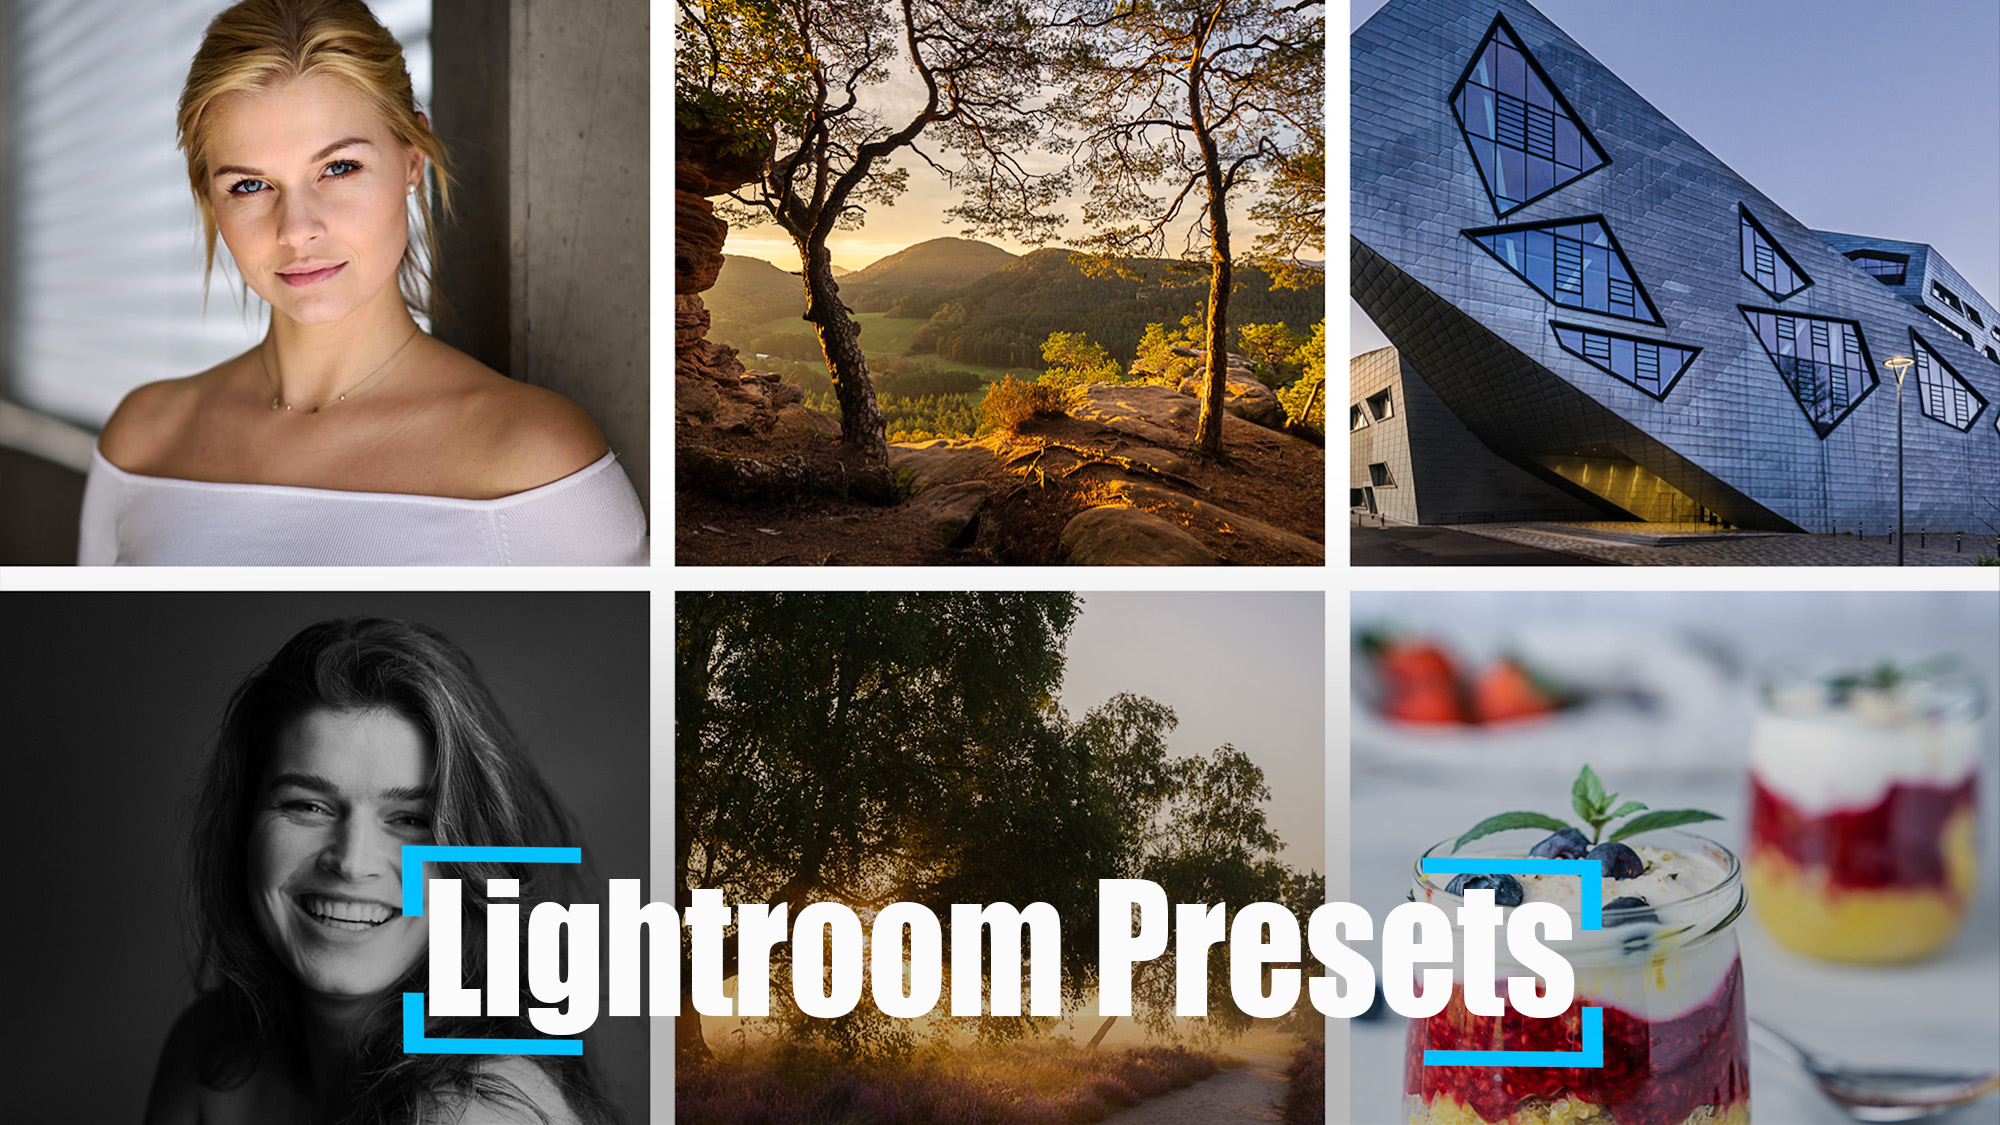 Lightroom Presets 16x9